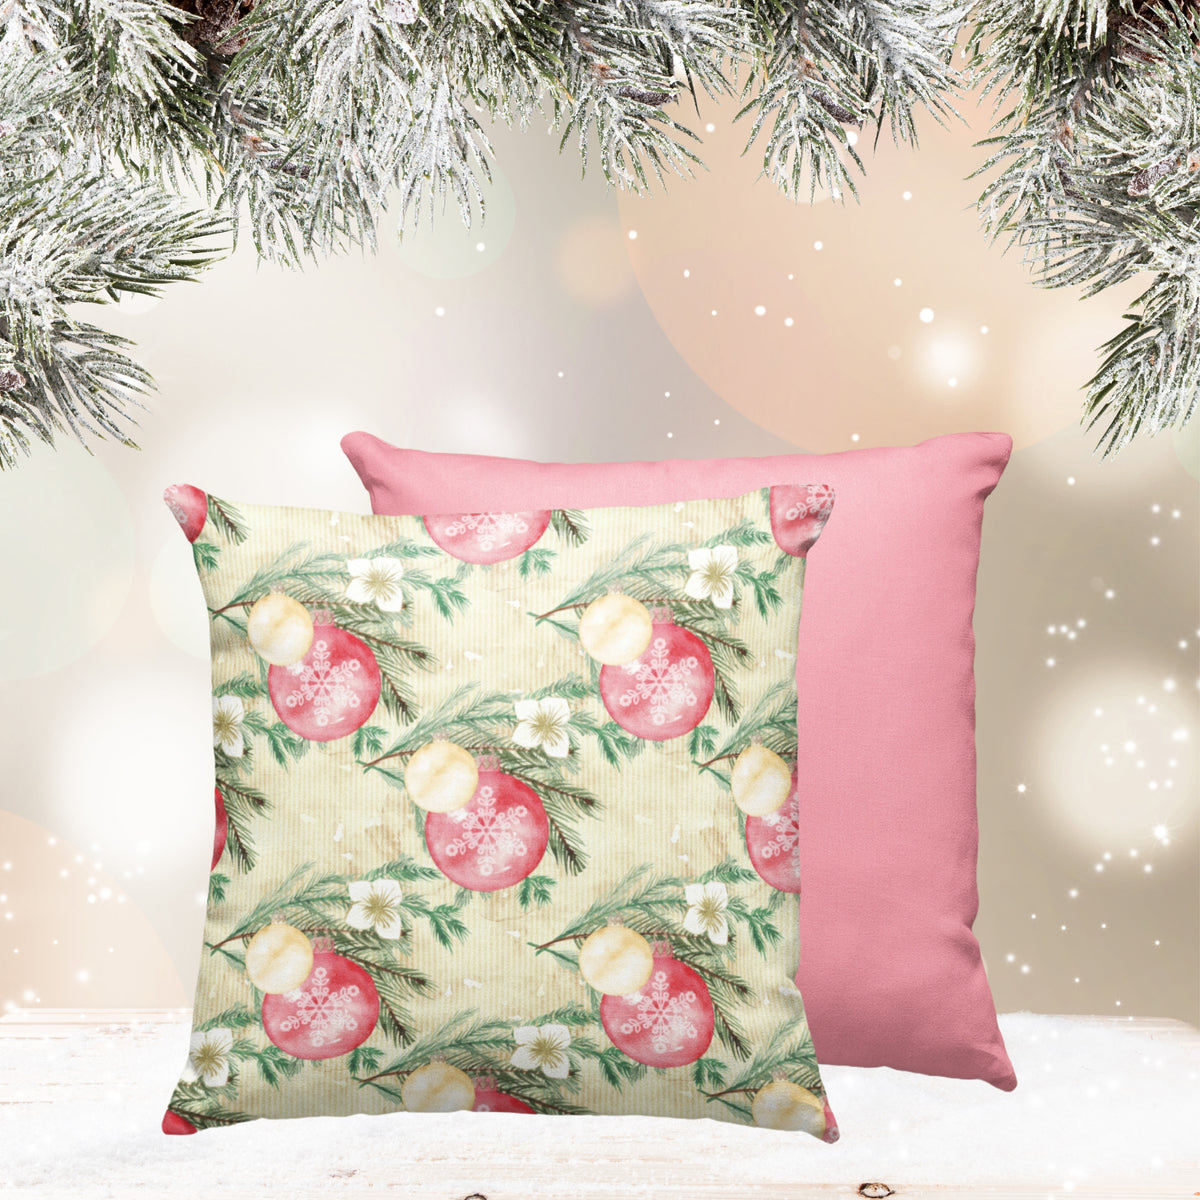 Retro Pink Ornaments Christmas Pillow